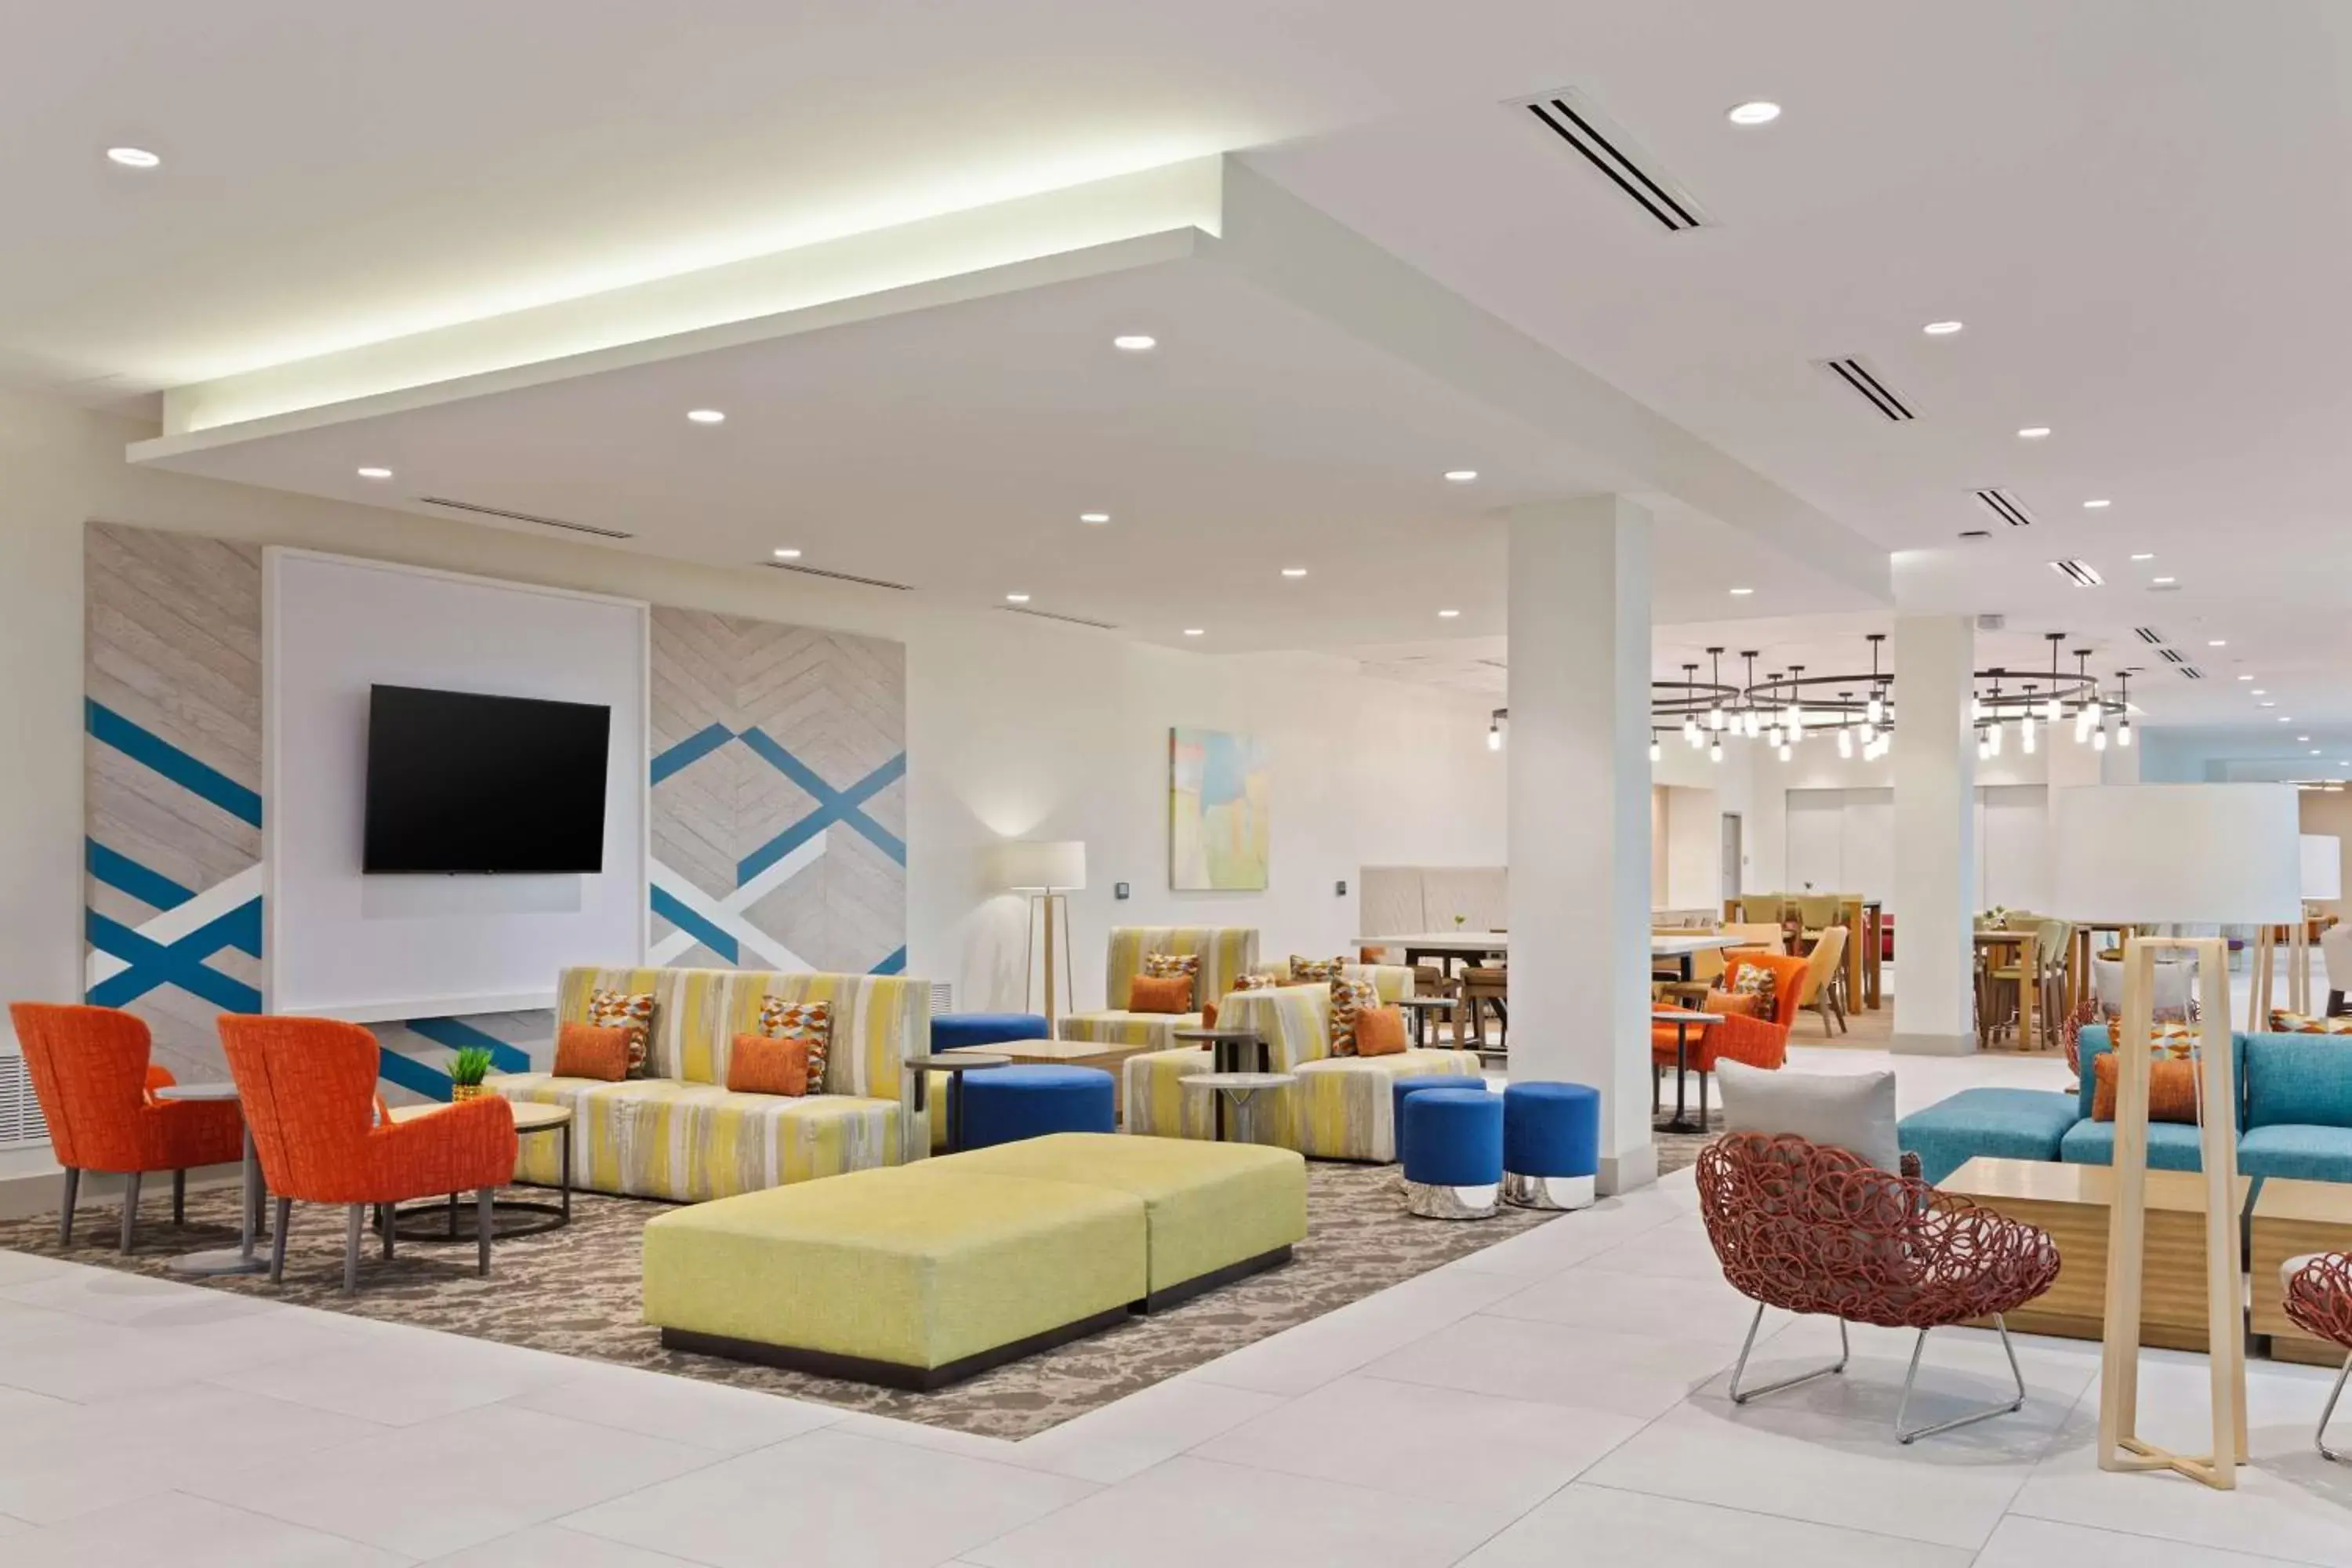 Lobby or reception in Hilton Garden Inn Homestead, Fl